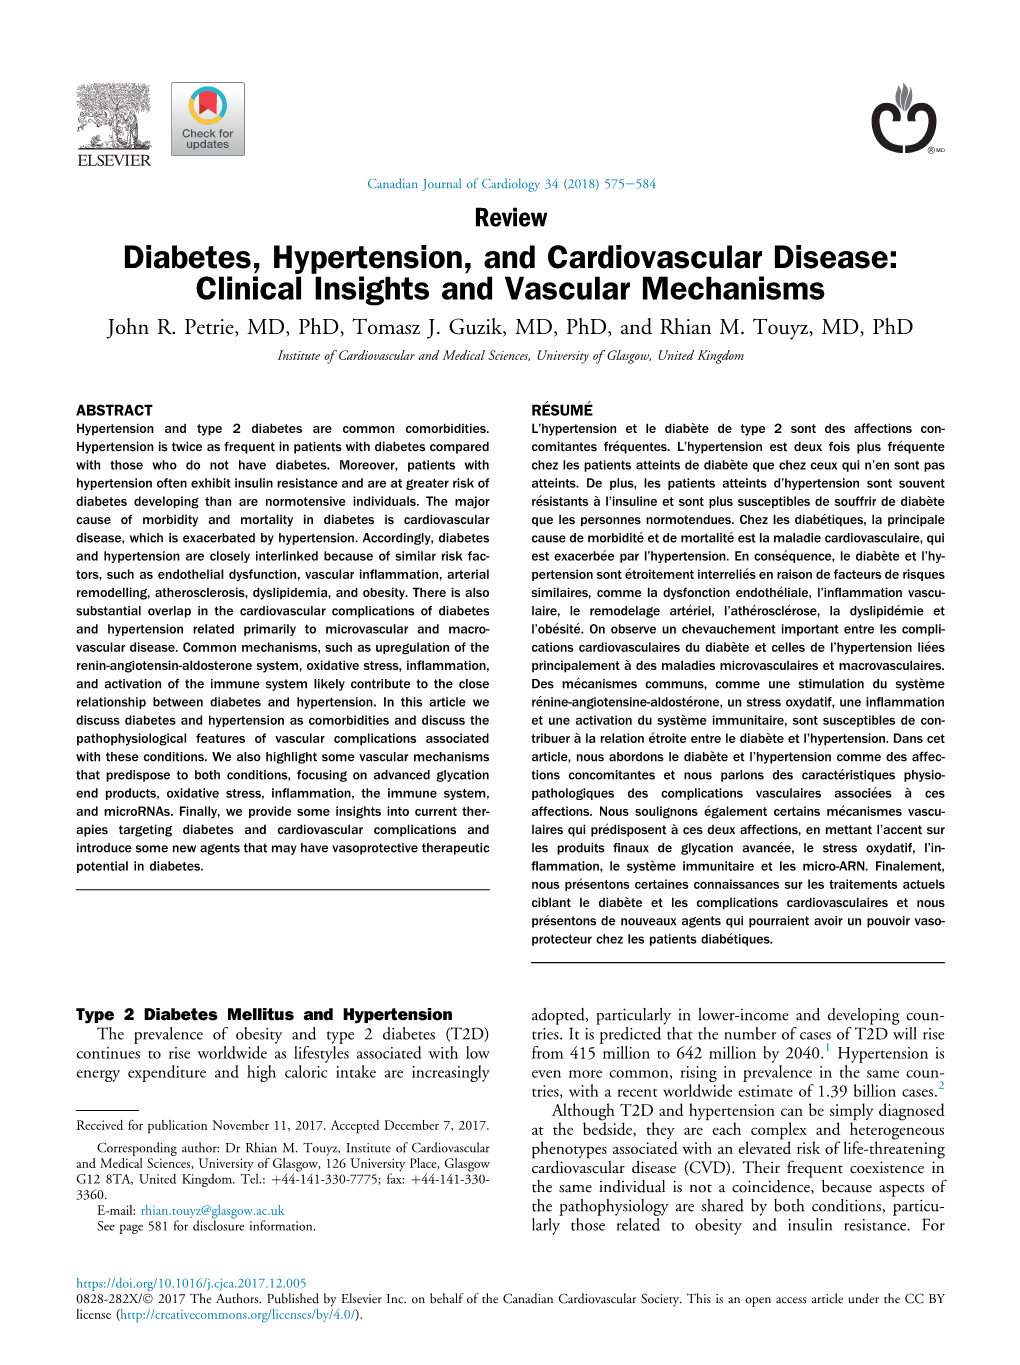 Diabetes, Hypertension, and Cardiovascular Disease: Clinical Insights and Vascular Mechanisms John R